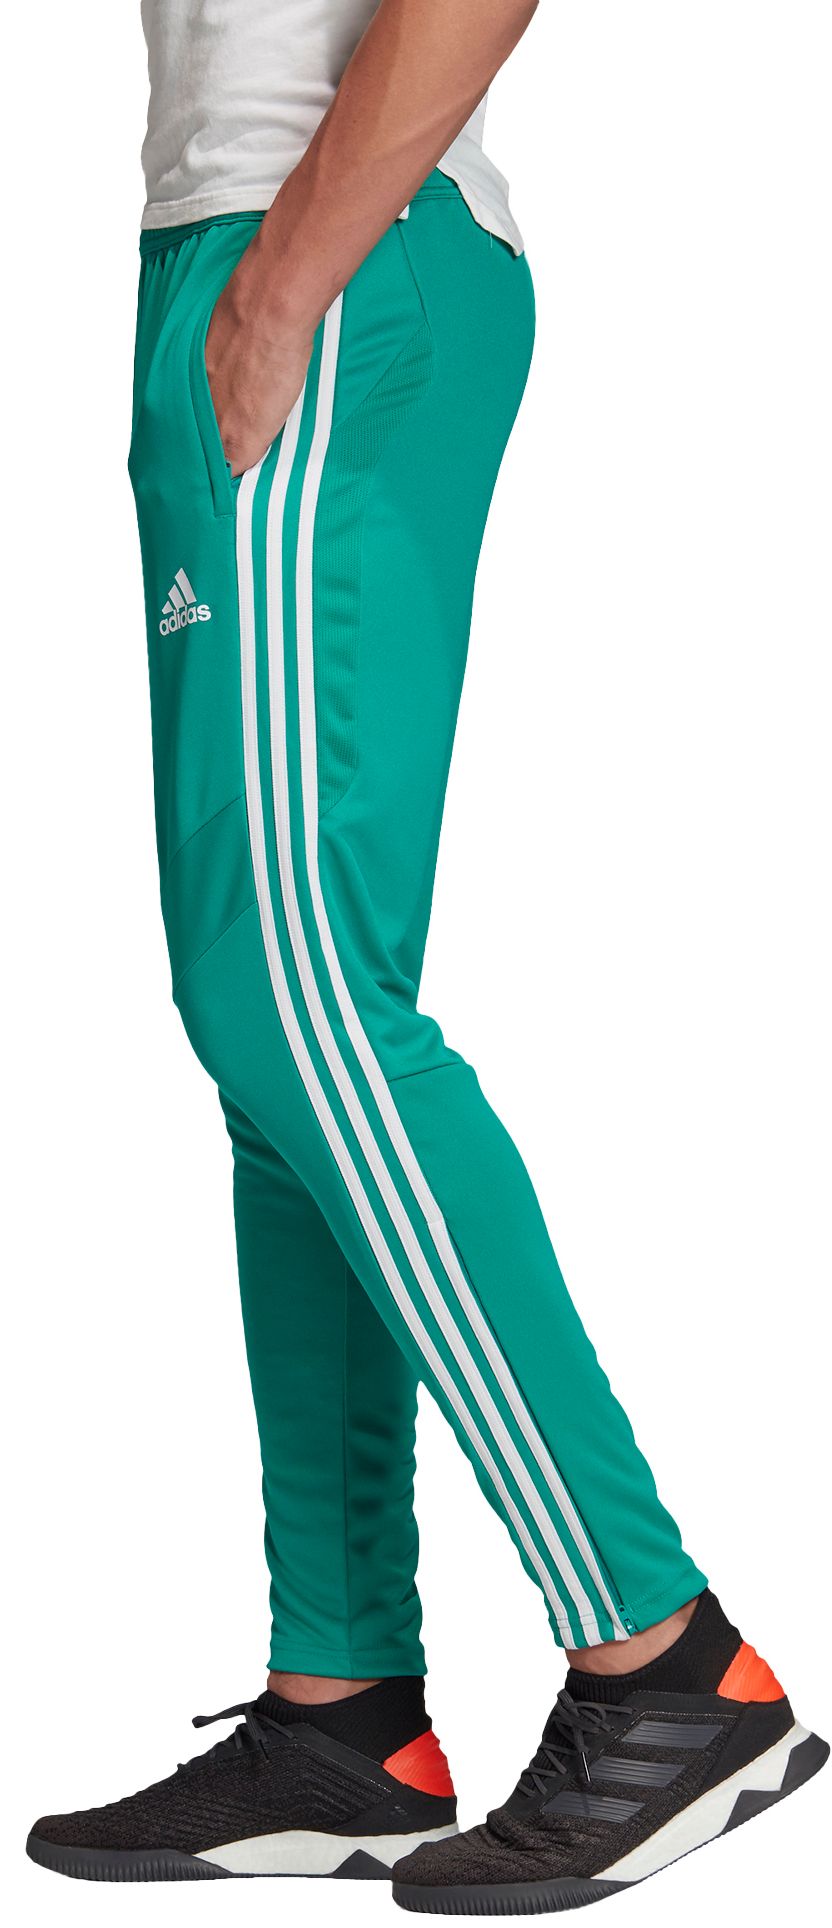 adidas graphic workout pants